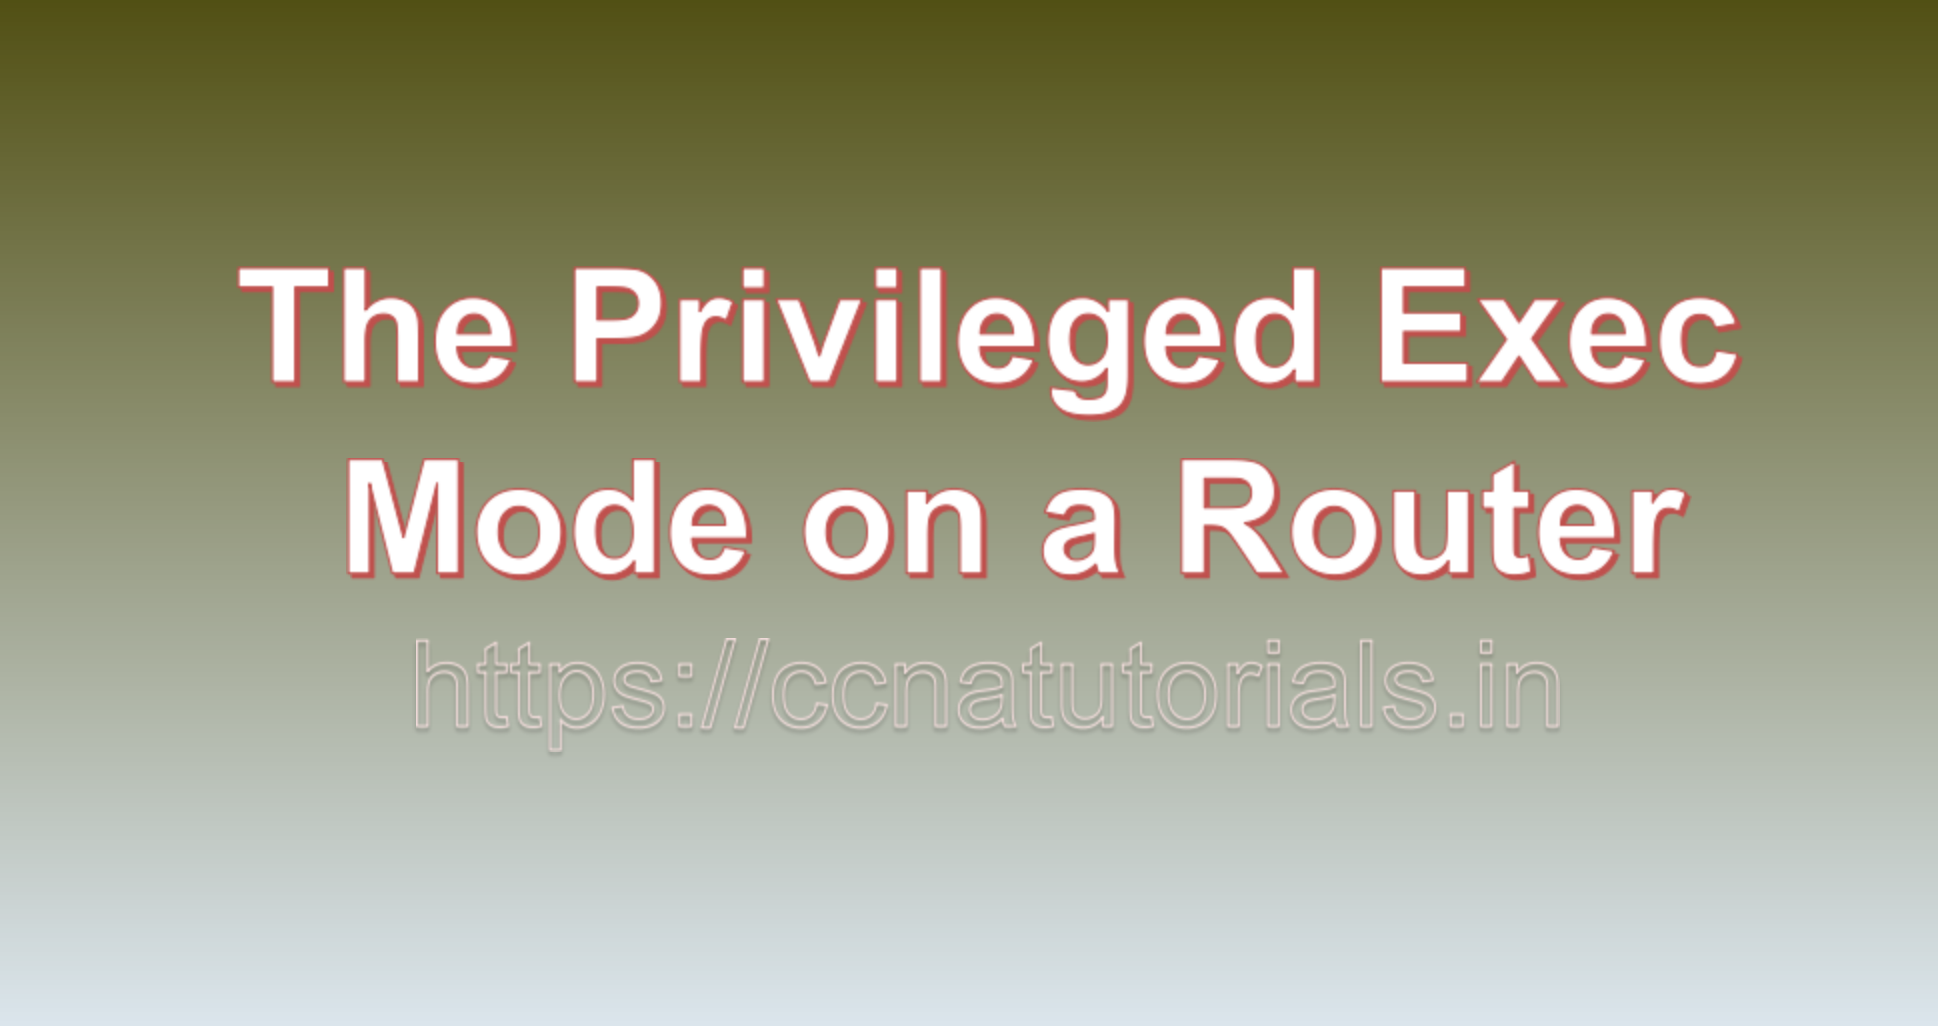 The Privileged Exec Mode on a Router, ccna, ccna tutorials